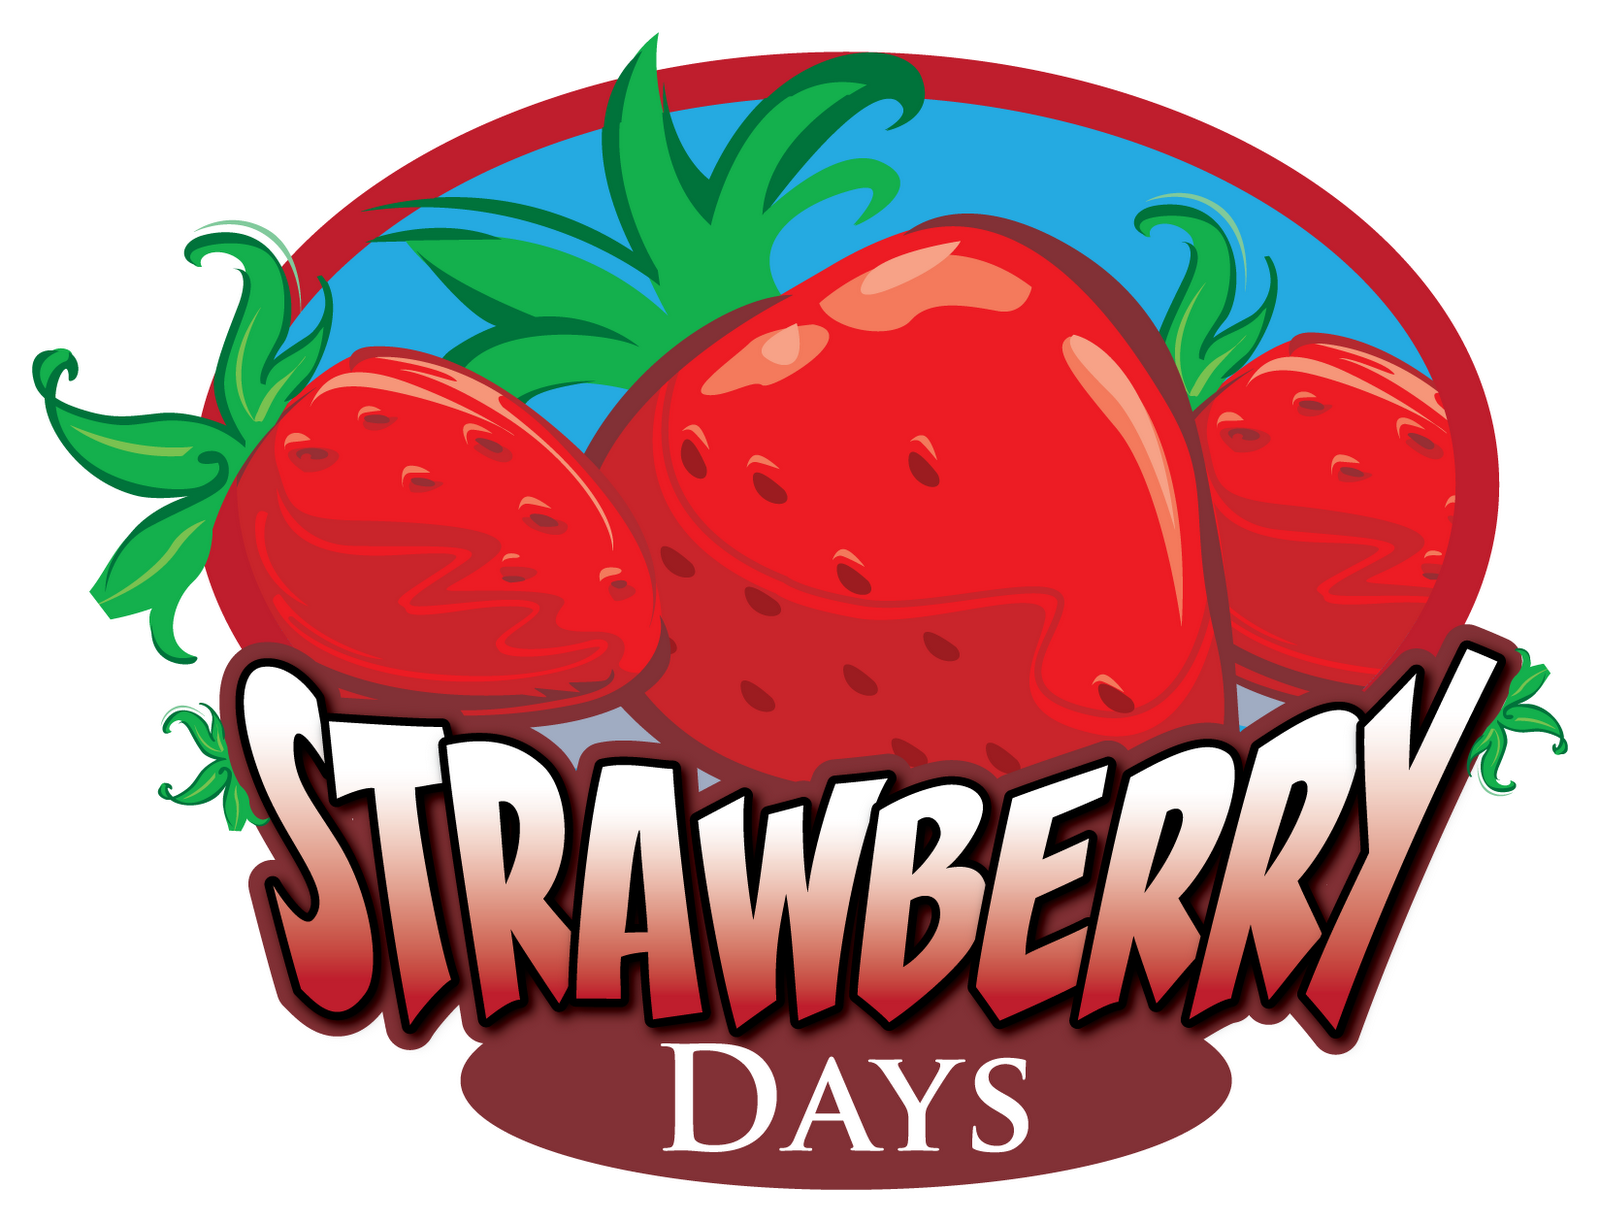 Cruzalicious Design Strawberry days